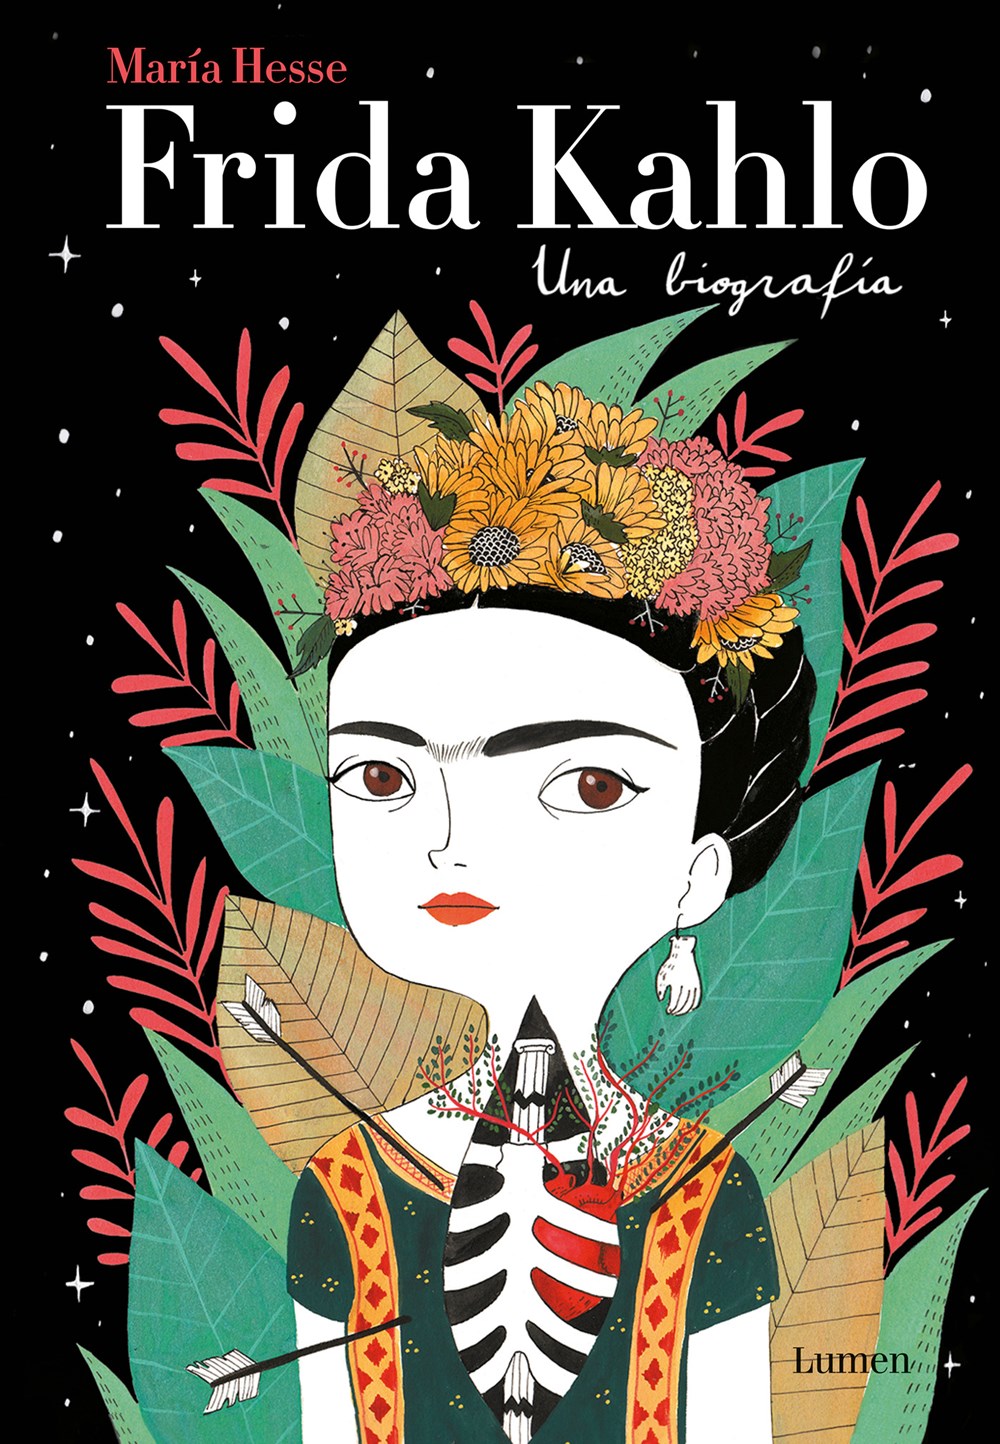 Frida Kahlo: An Illustrated Life